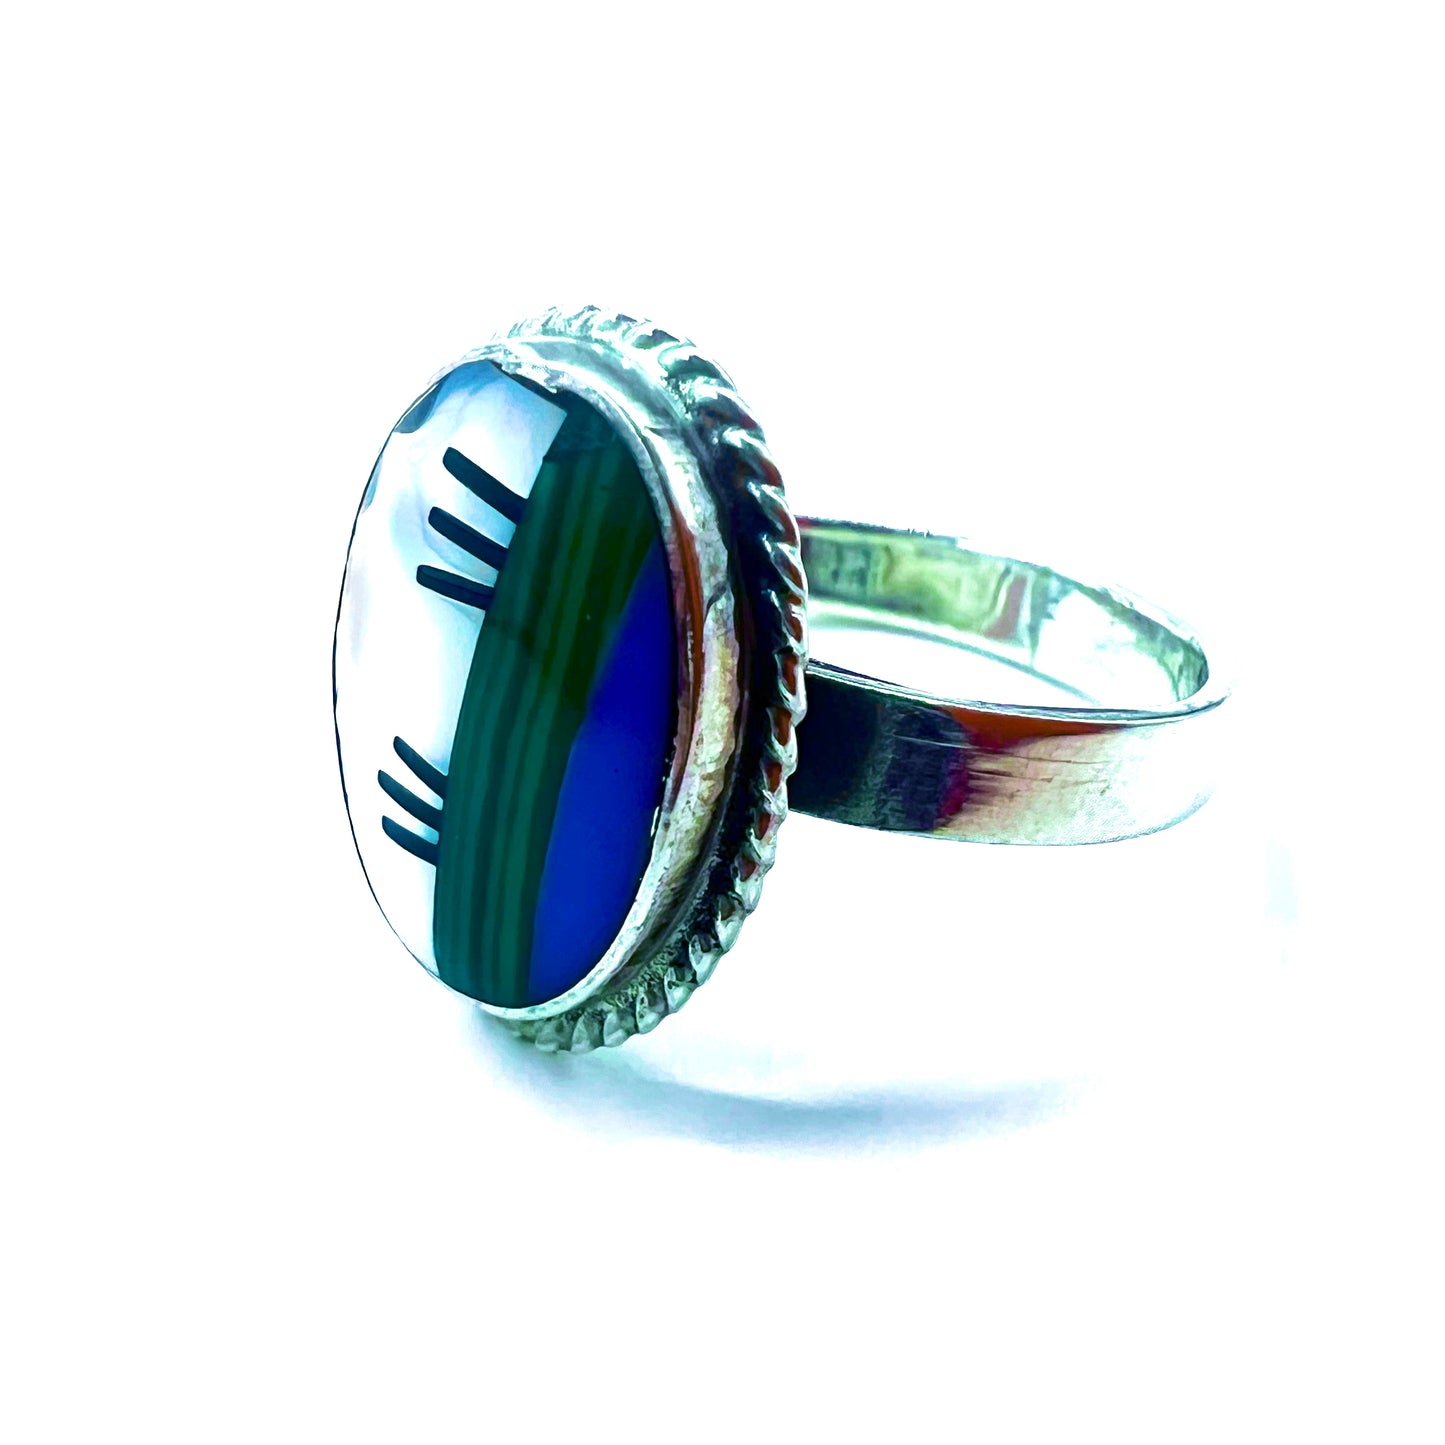 Vintage Indian Jewelry Ring ズニ族 インディアンジュエリー インレイ リング 指輪 11号 マルチカラー SILVER 925